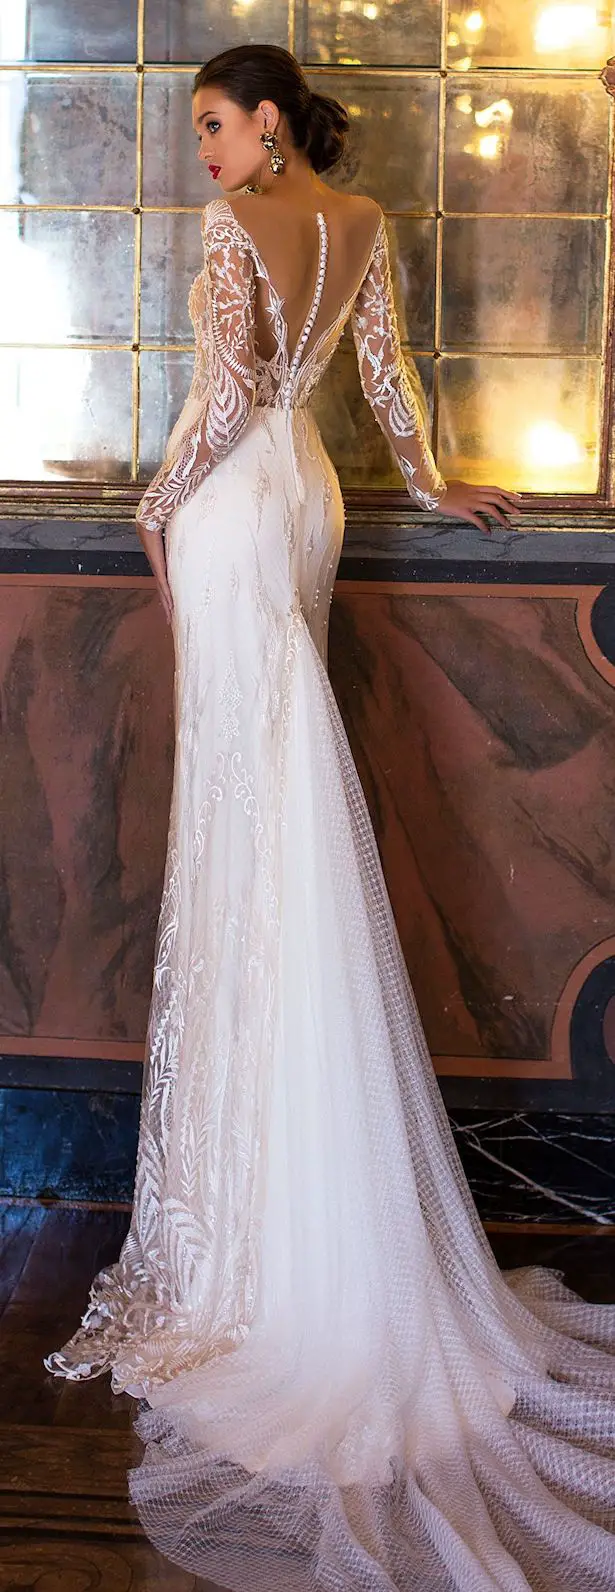 Wedding Dress by Milla Nova White Desire 2017 Bridal Collection - Fidela